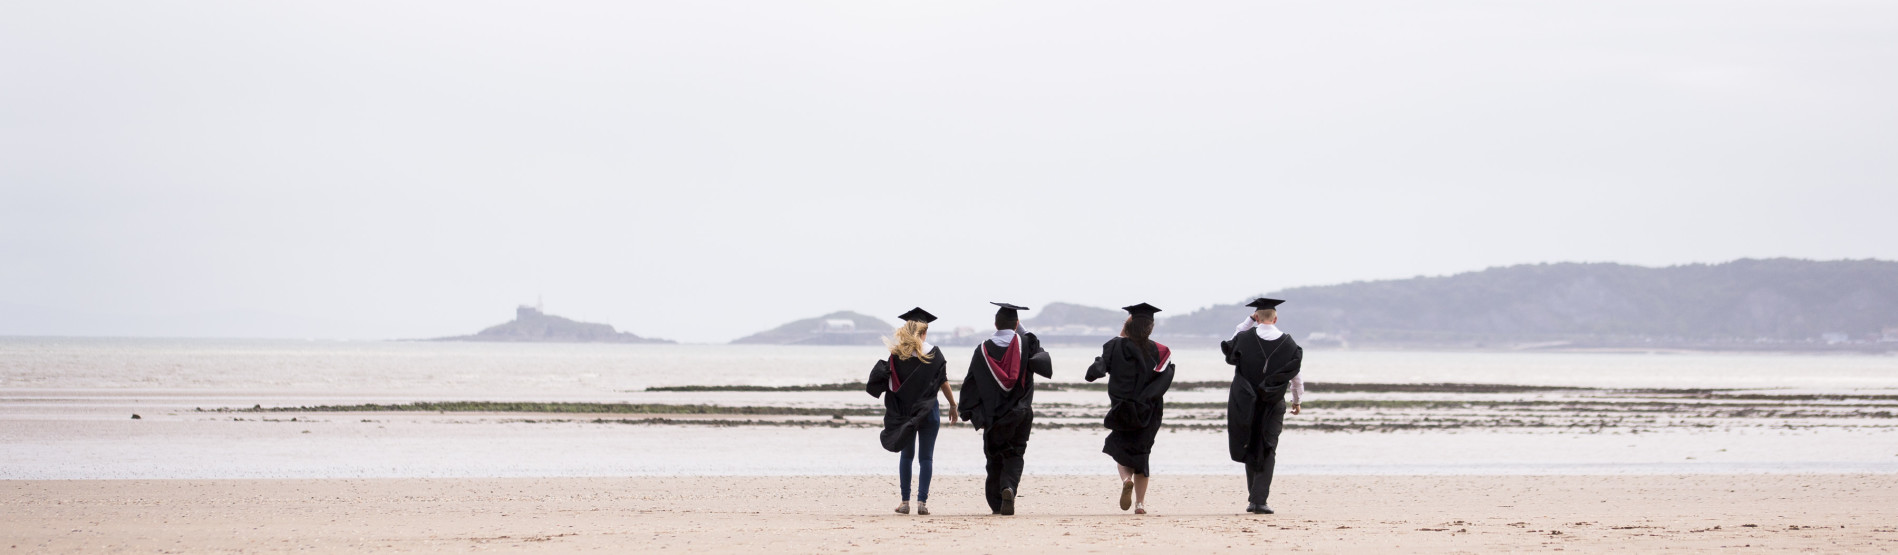 students walking across the beach